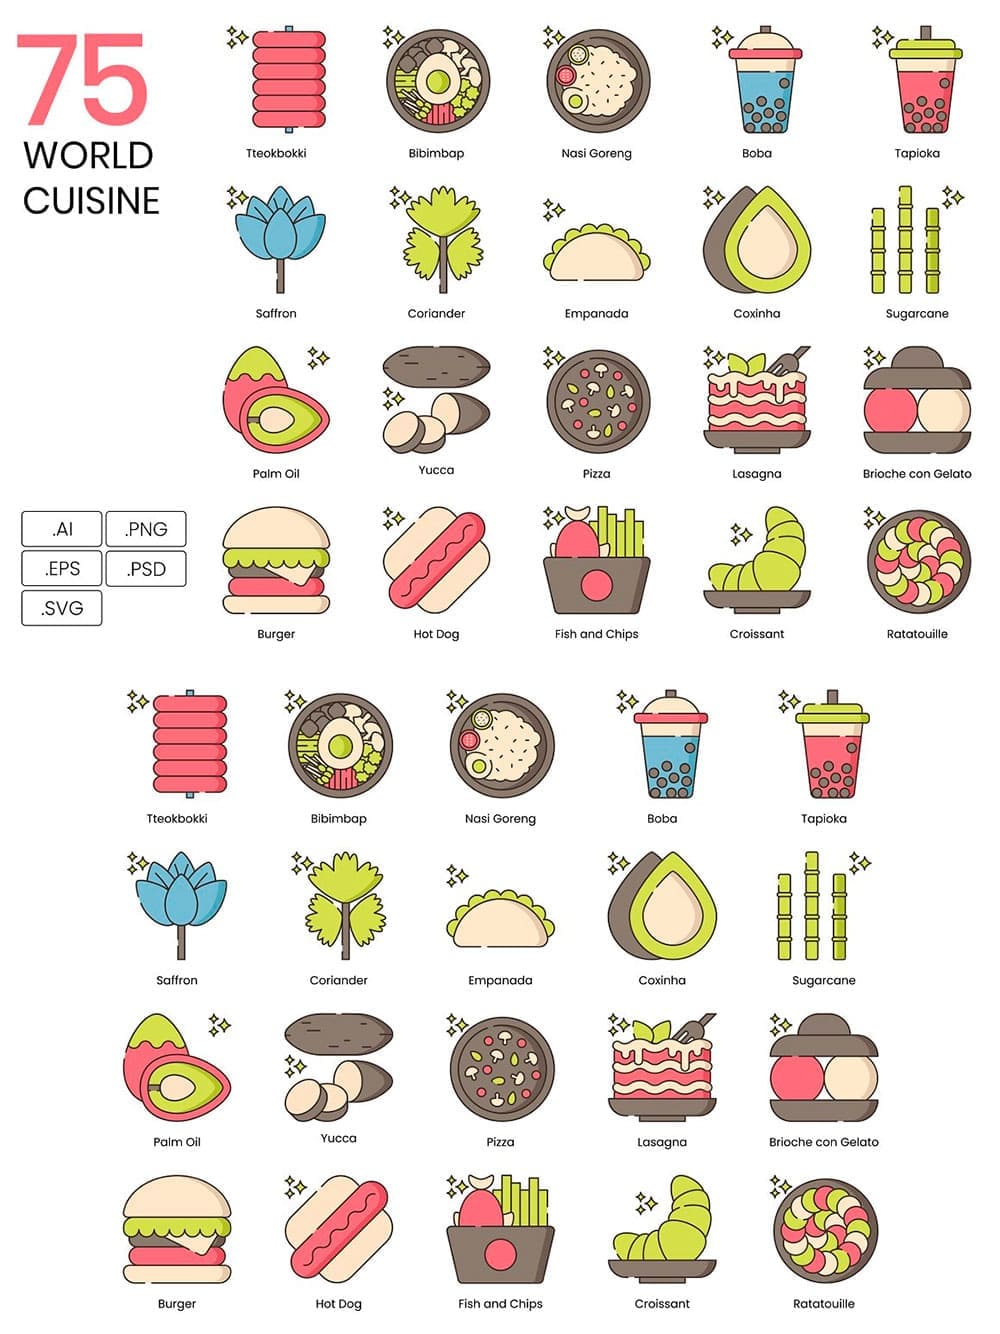 75 world cuisine icons hazel, picture for pinterest.